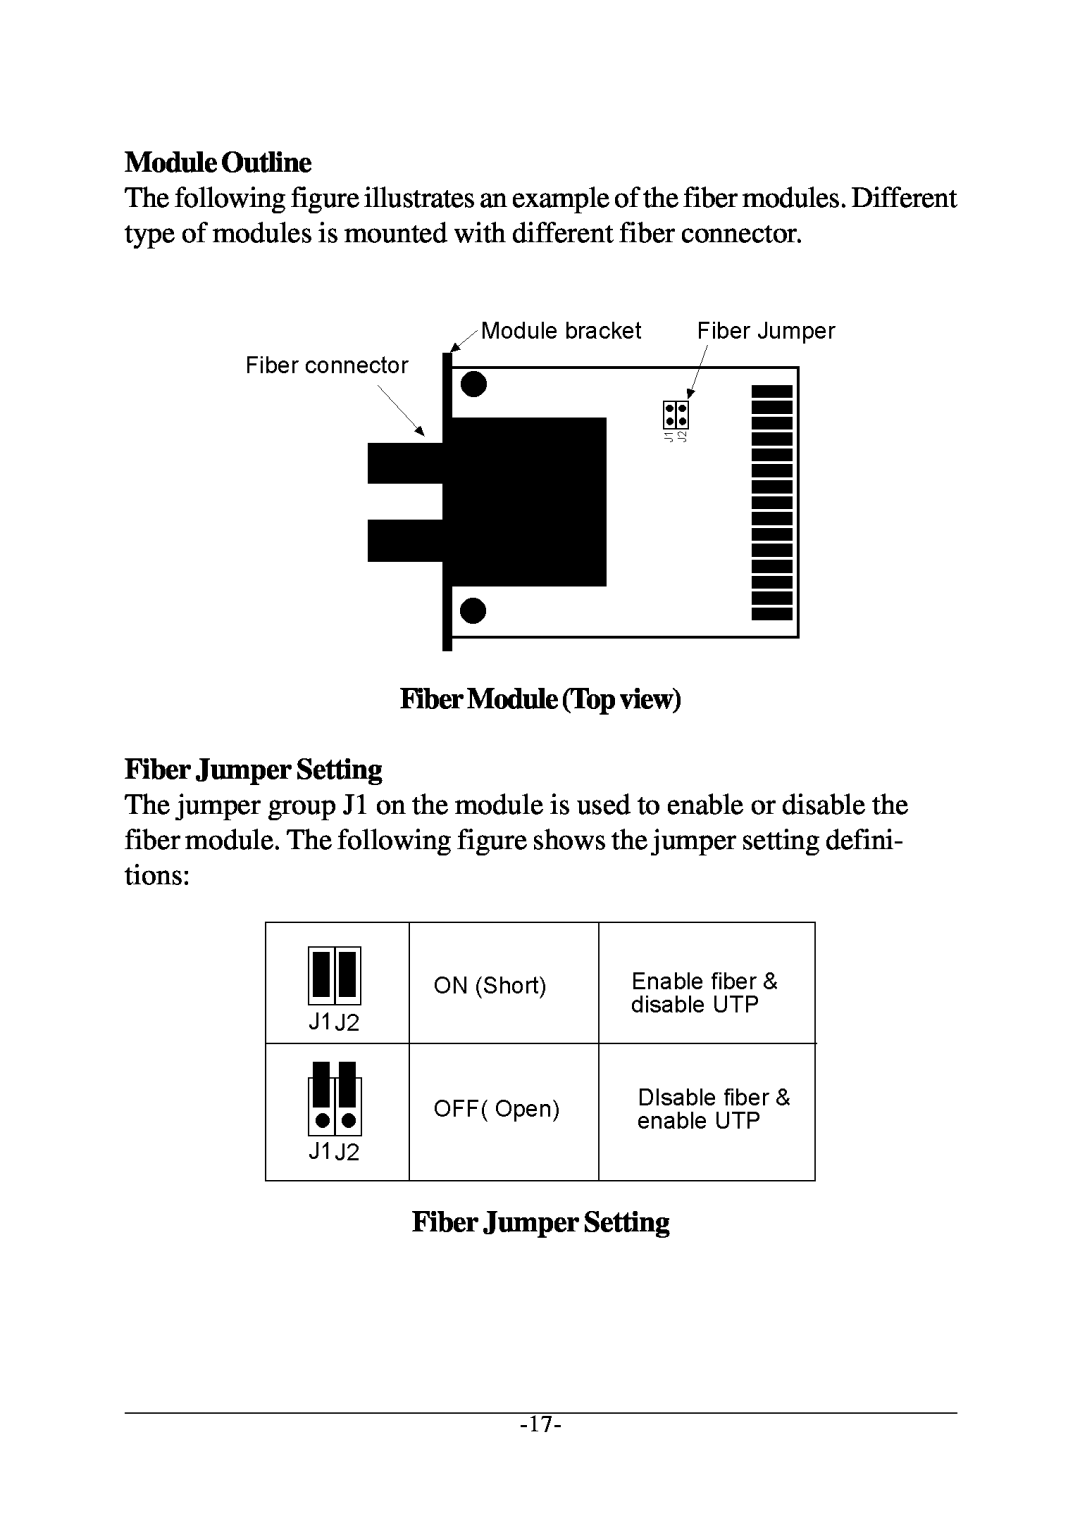 Xerox KS-801 operation manual Module Outline, Fiber Module Top view Fiber Jumper Setting 